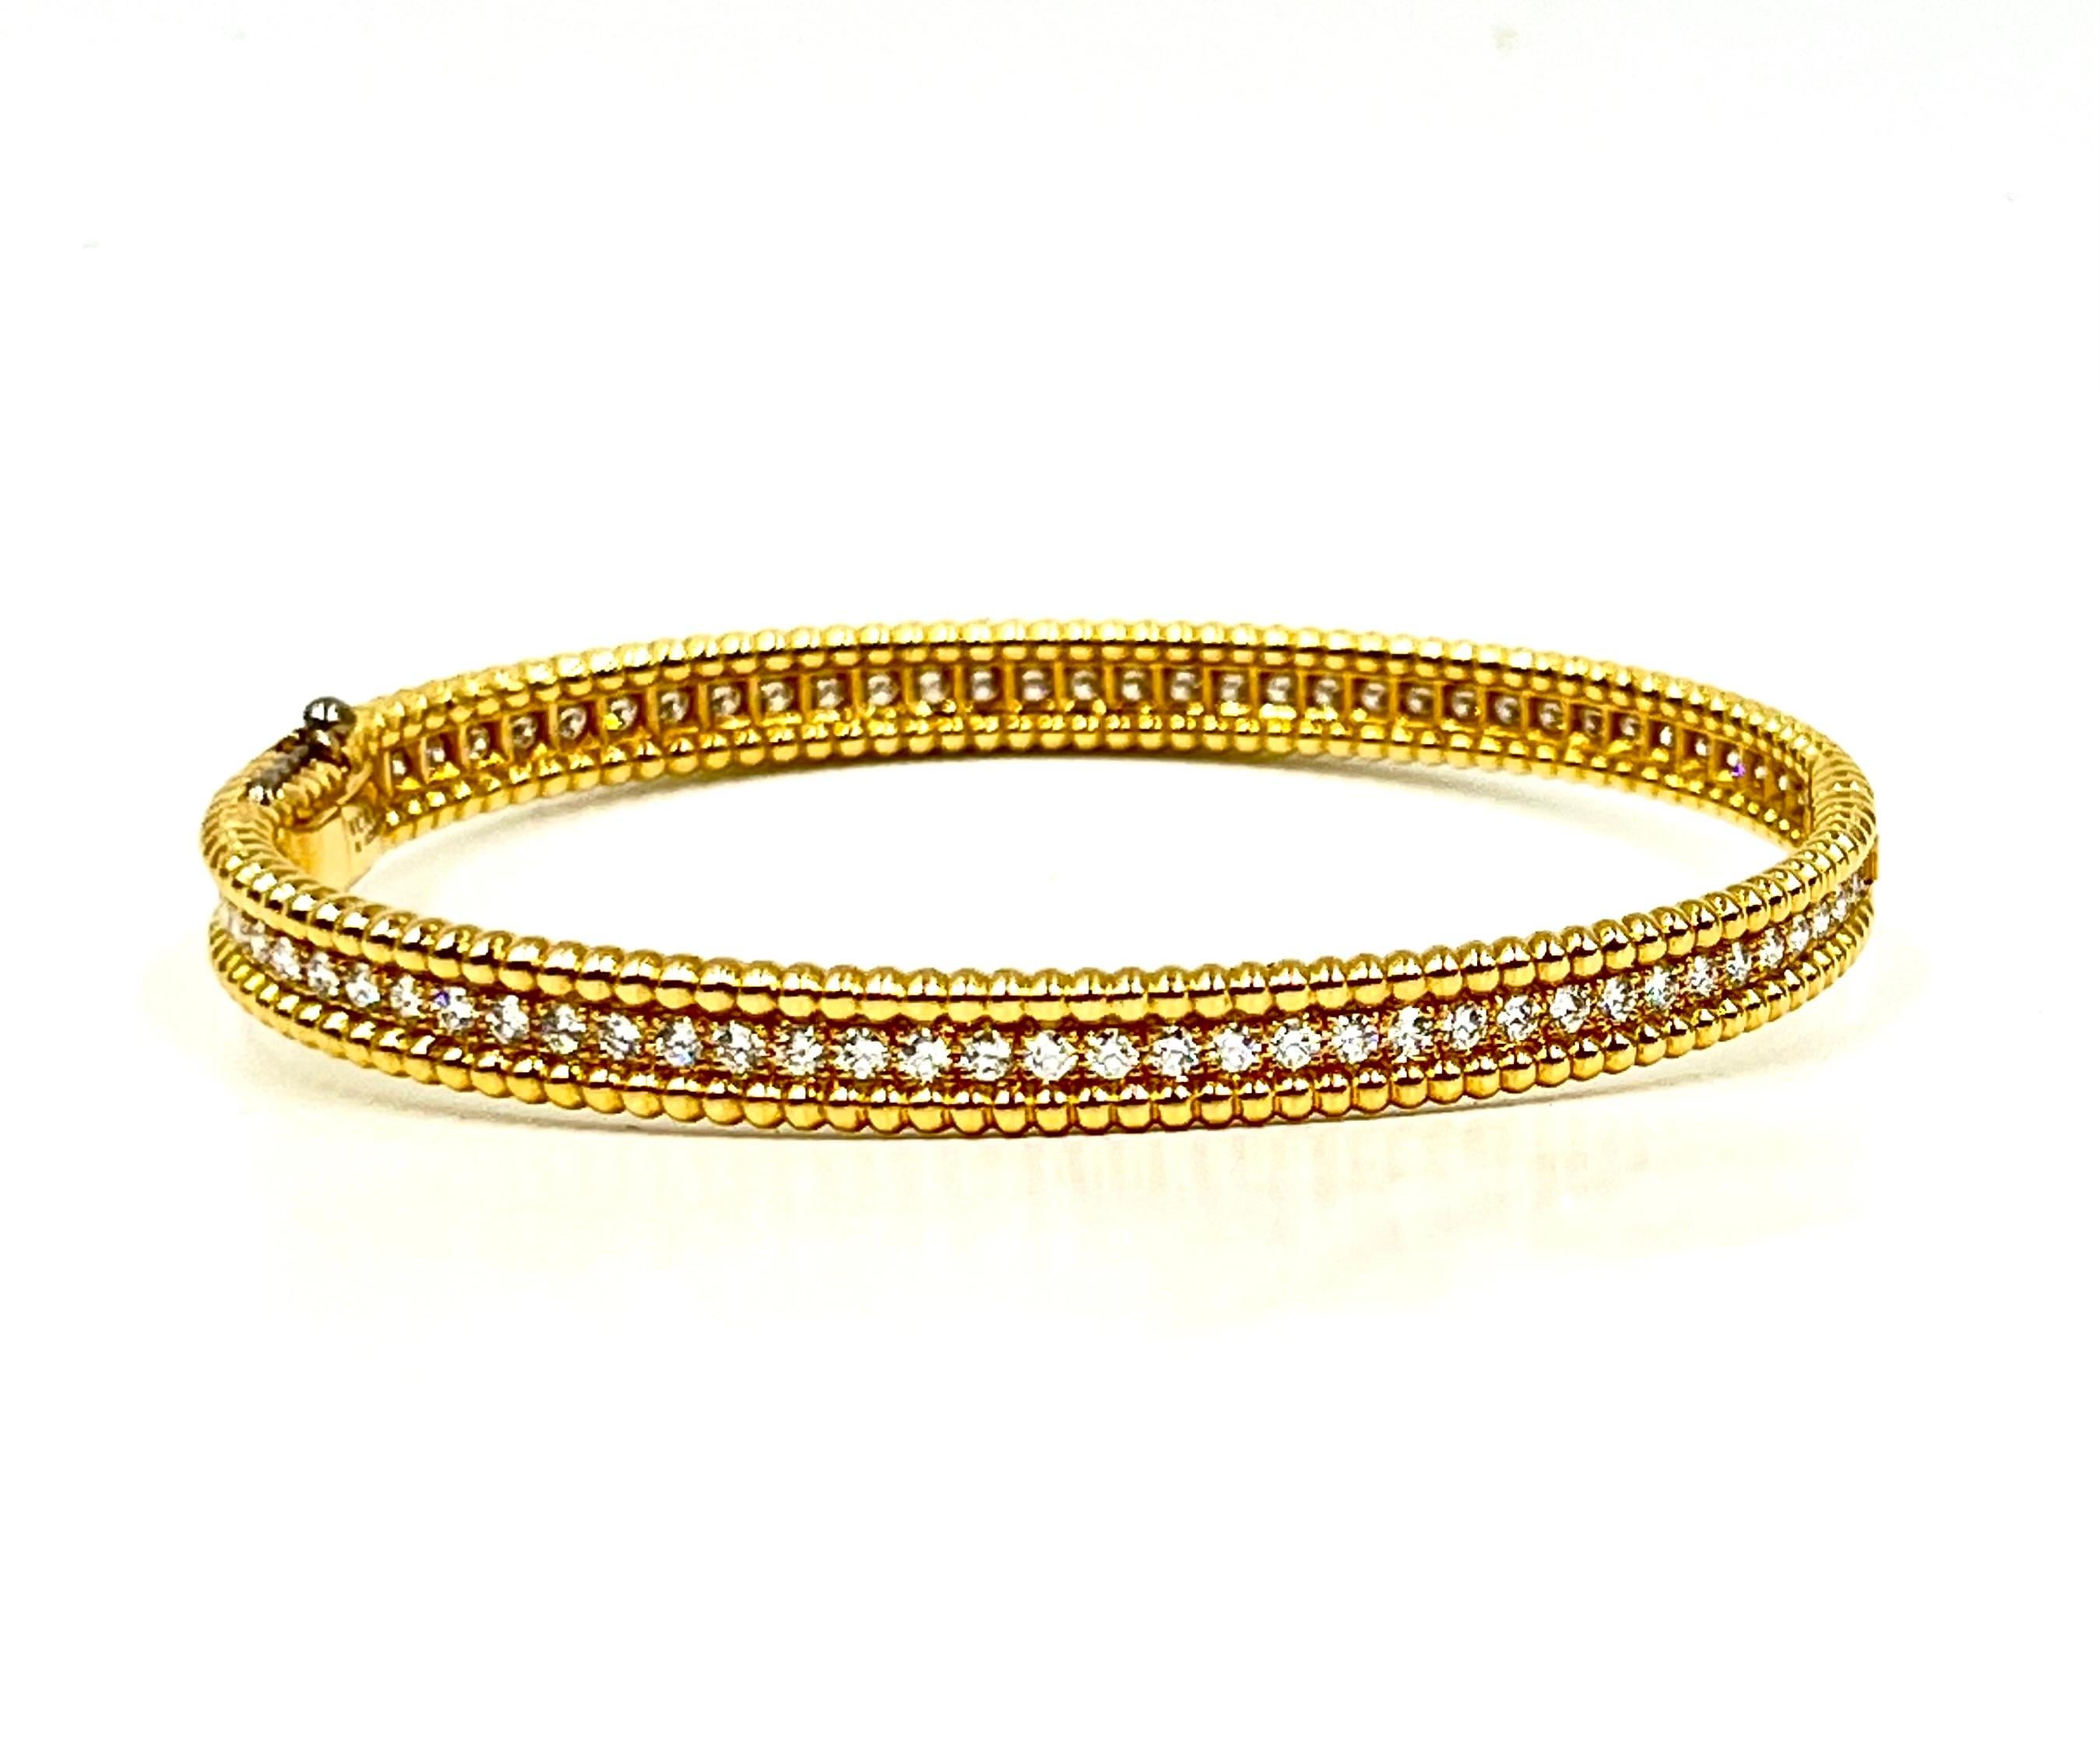 Round Cut Van Cleef & Arpels Perlée Yellow Gold Diamond Bracelet, Size Small